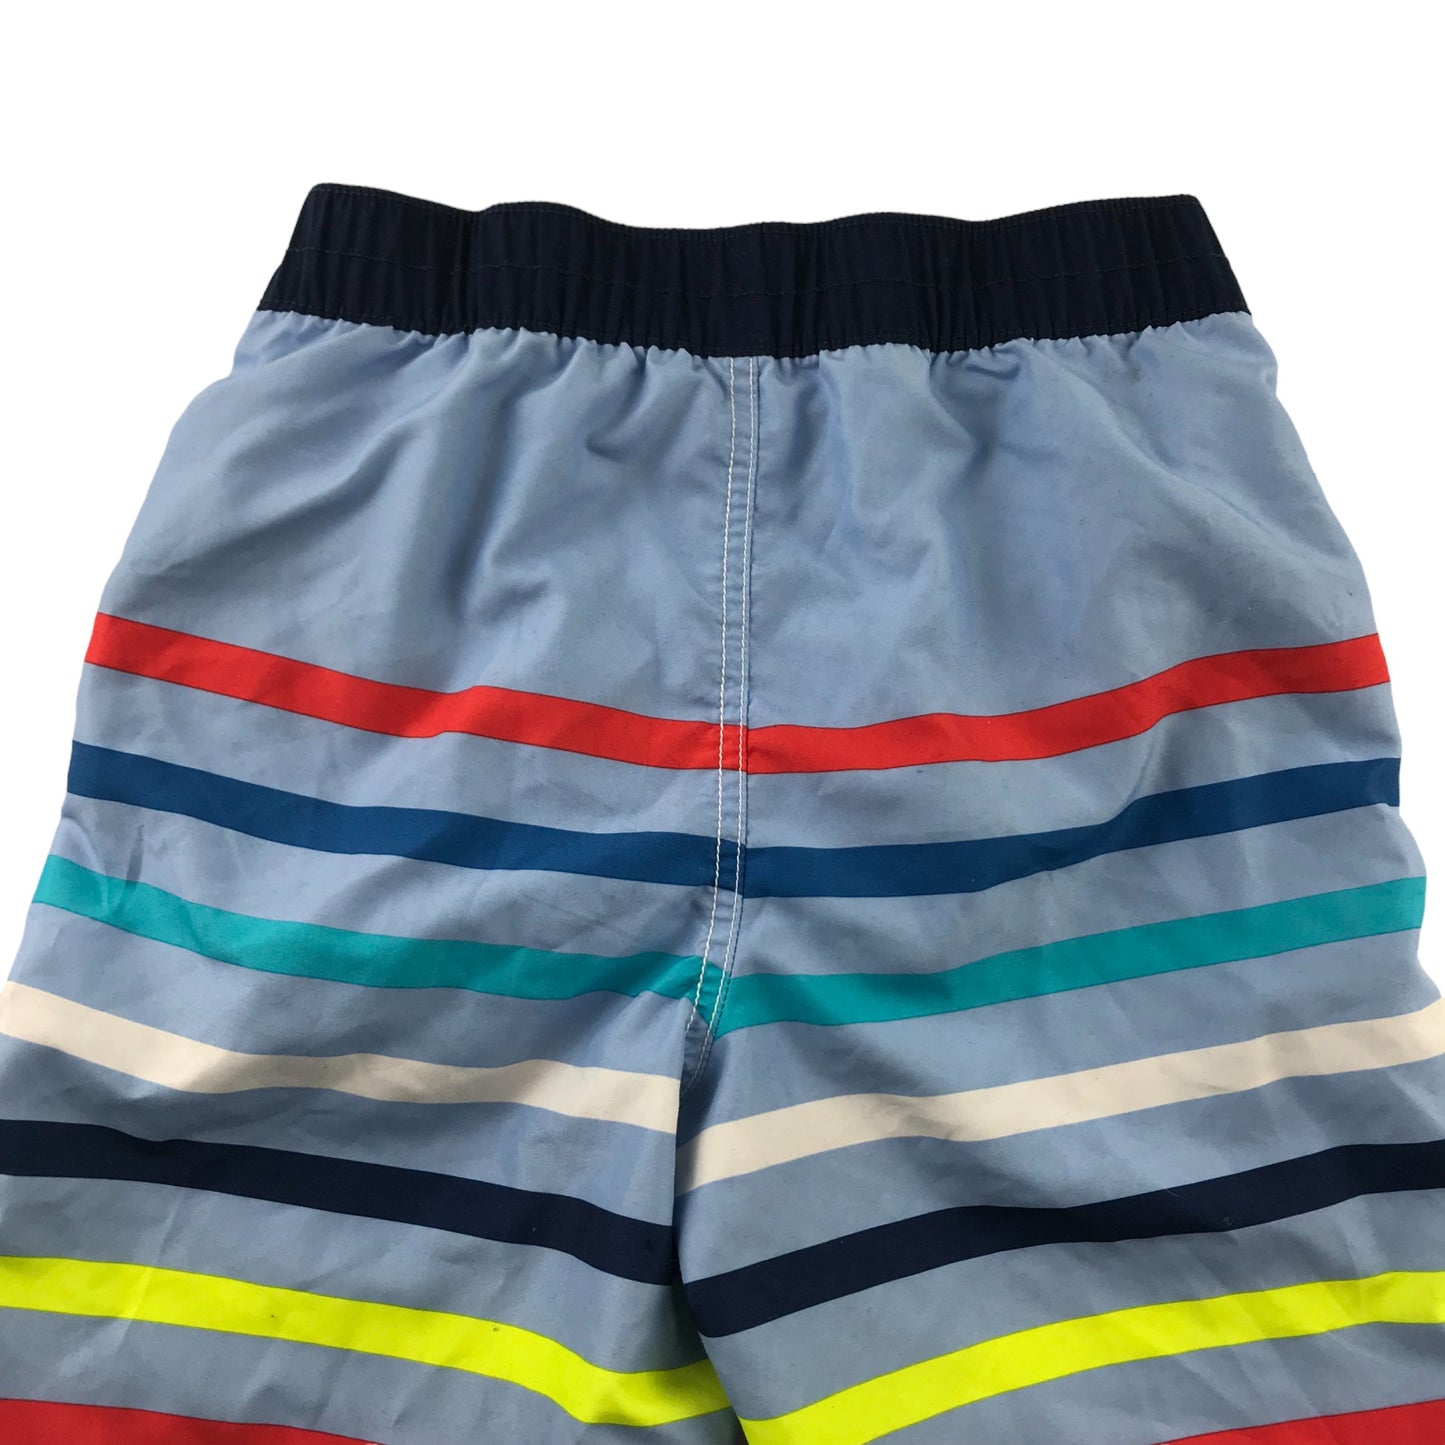 GAP Swim Trunks Age 10 Blue and Multicolour Stripy Shorts